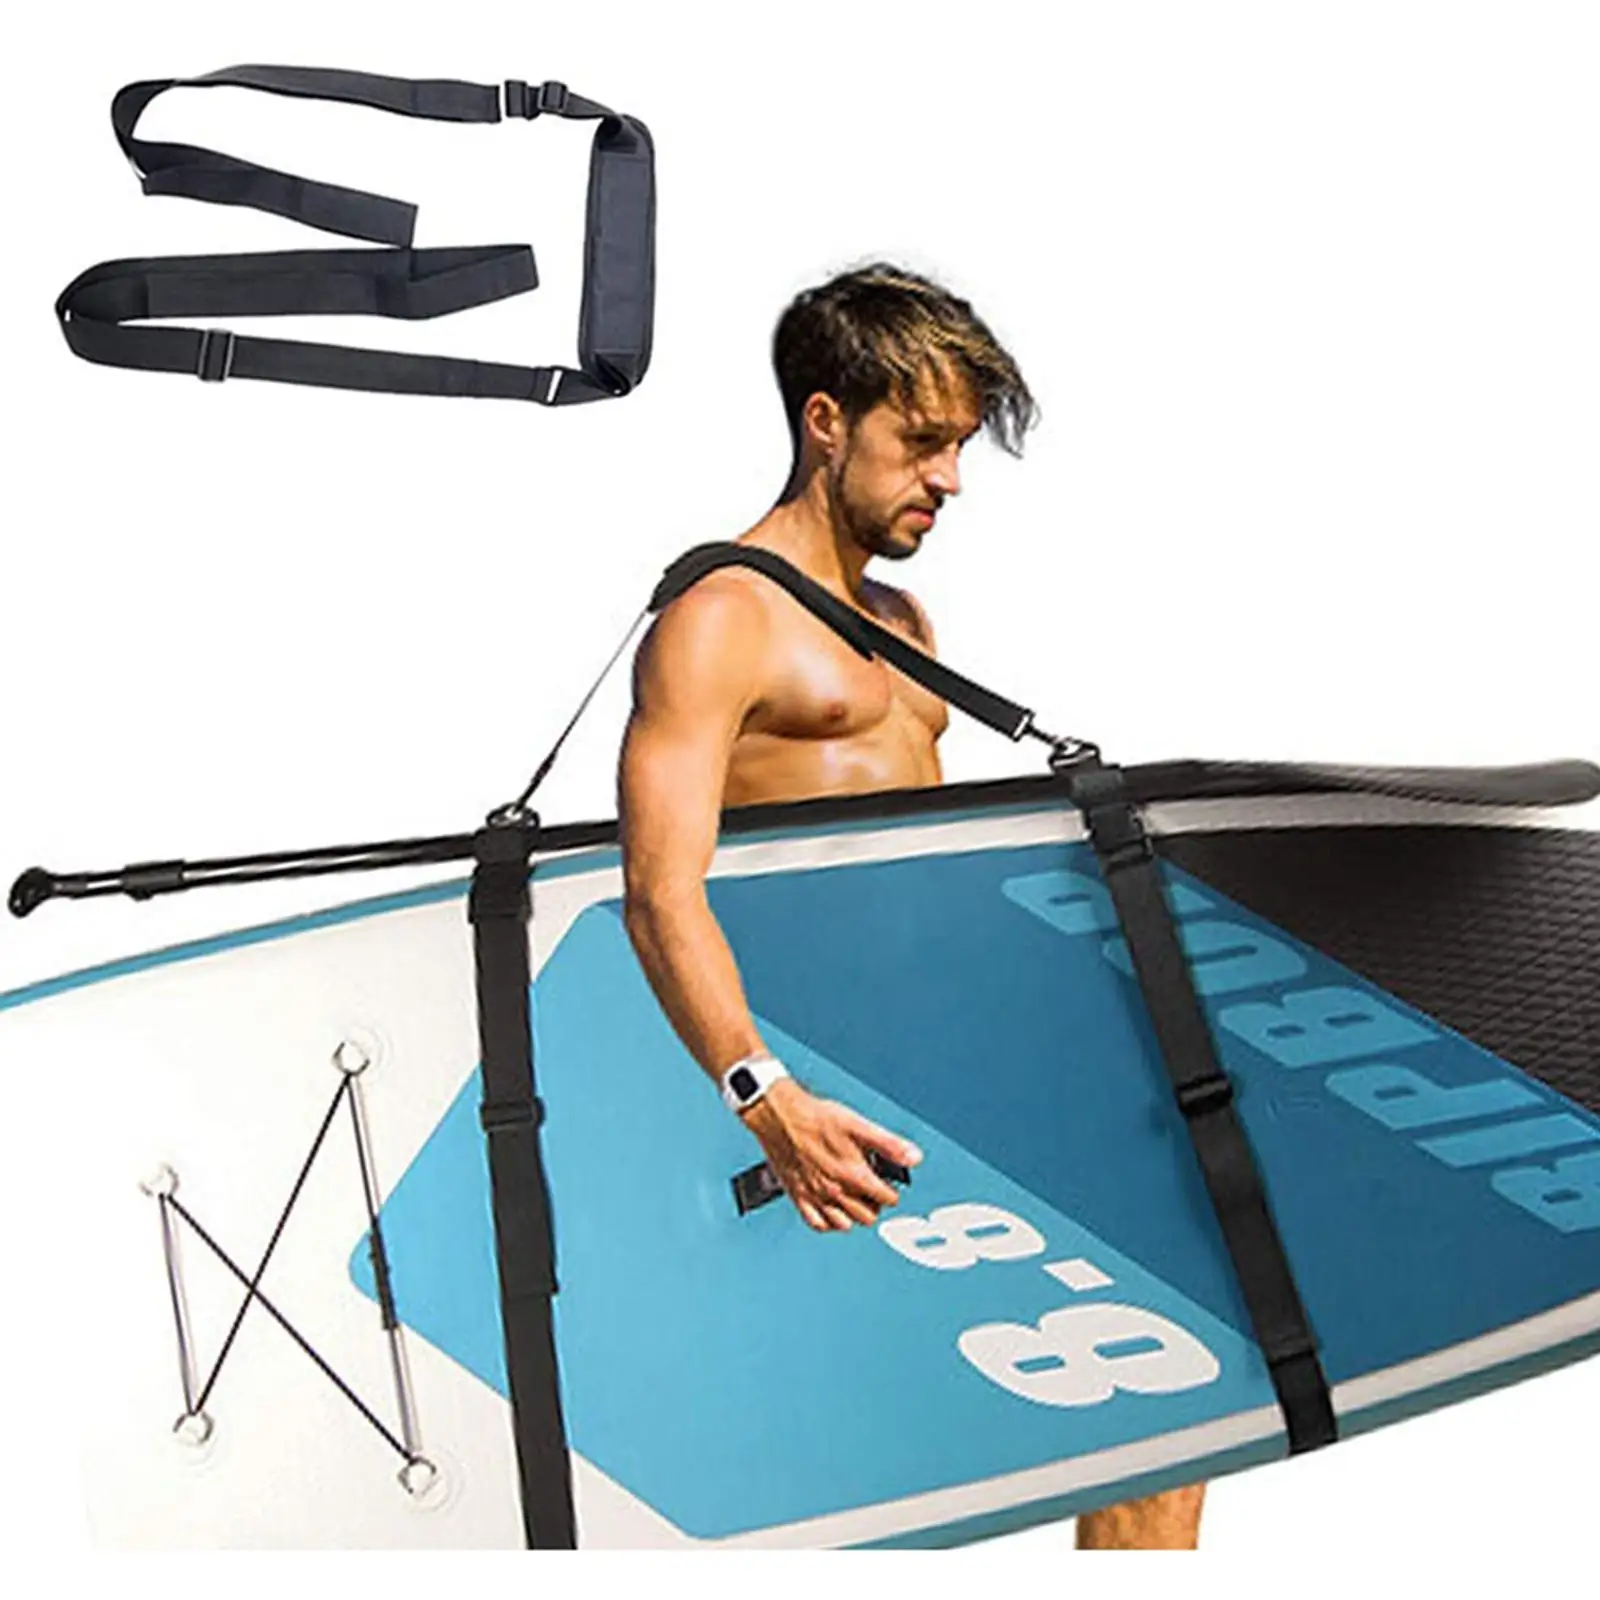 Universal Surfboard Carry Straps Shoulder Strap Durable Paddleboard Comfort Adjustable for Tourism Beach Kayak Fishing Women